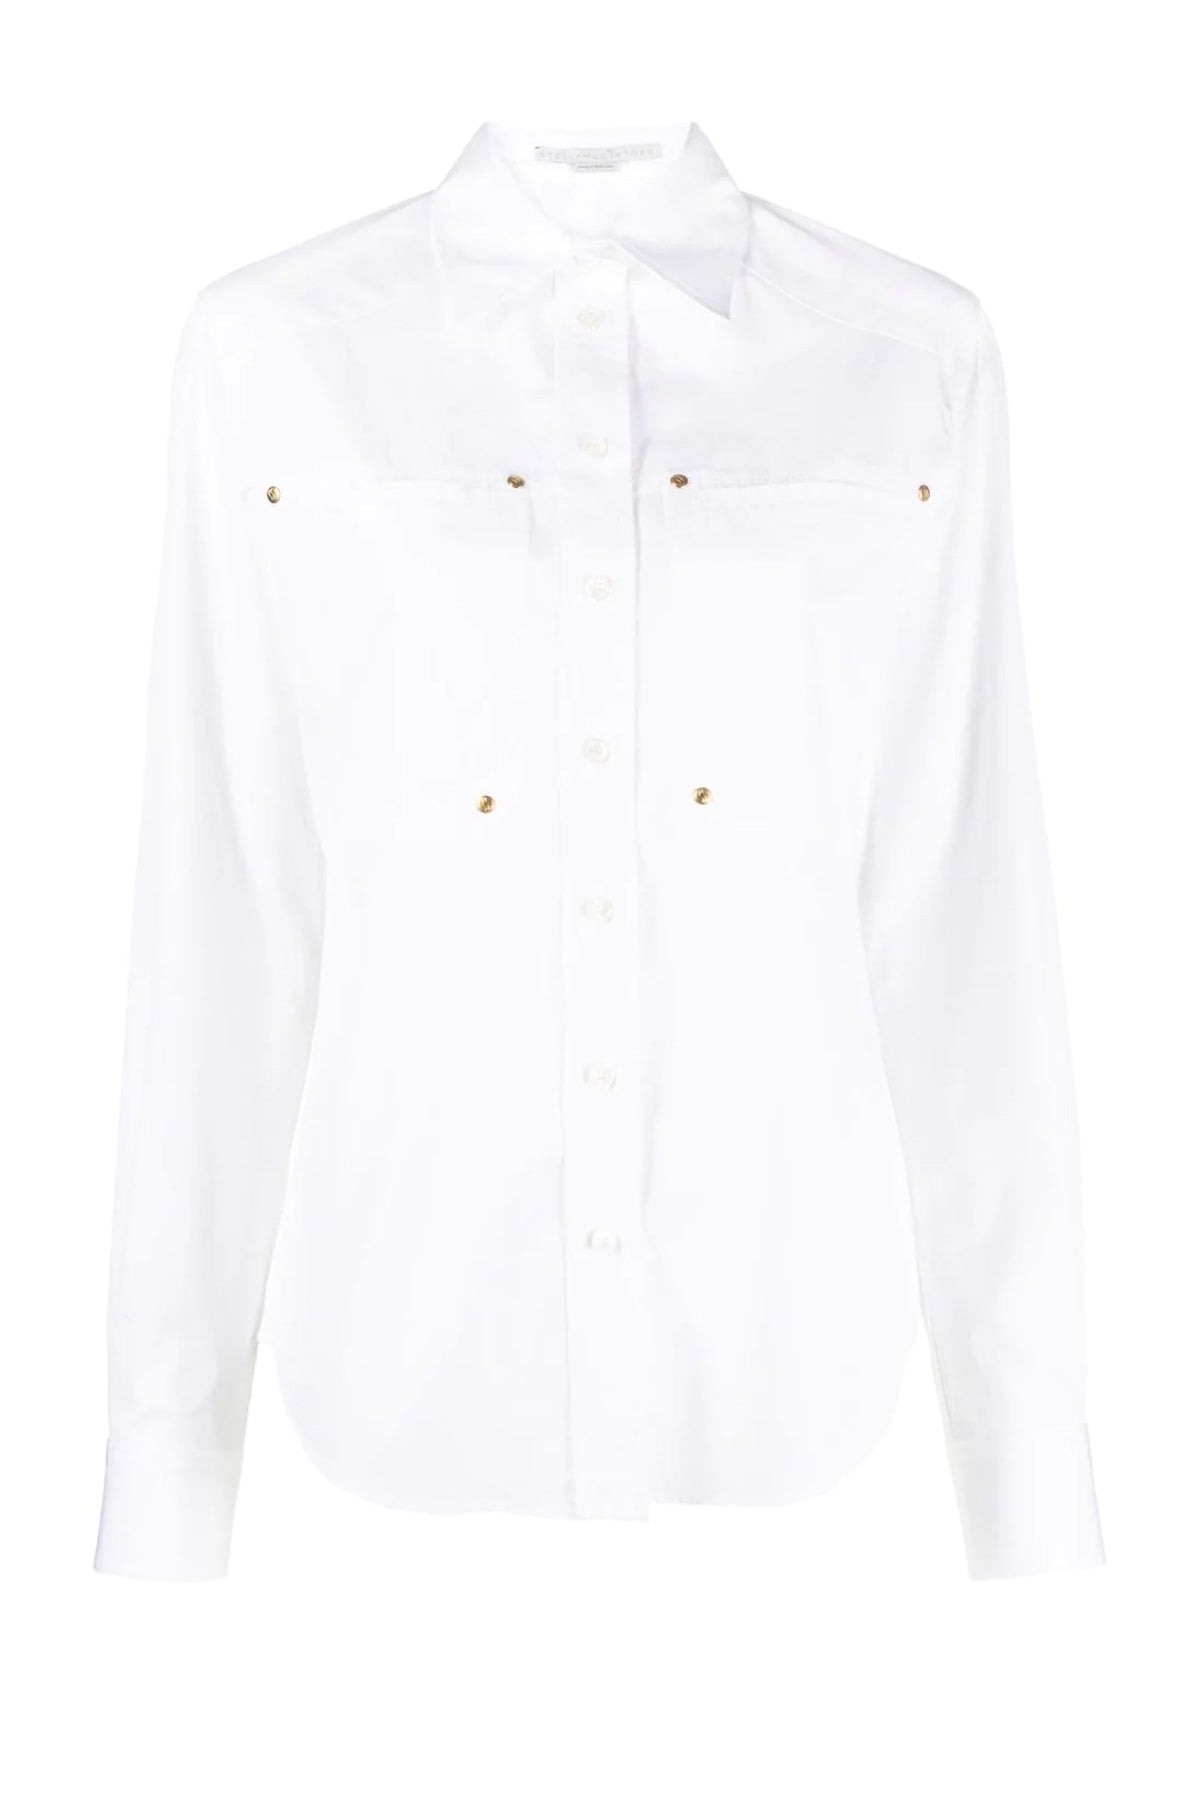 Stella McCartney Stud Detail Shirt - Pure White